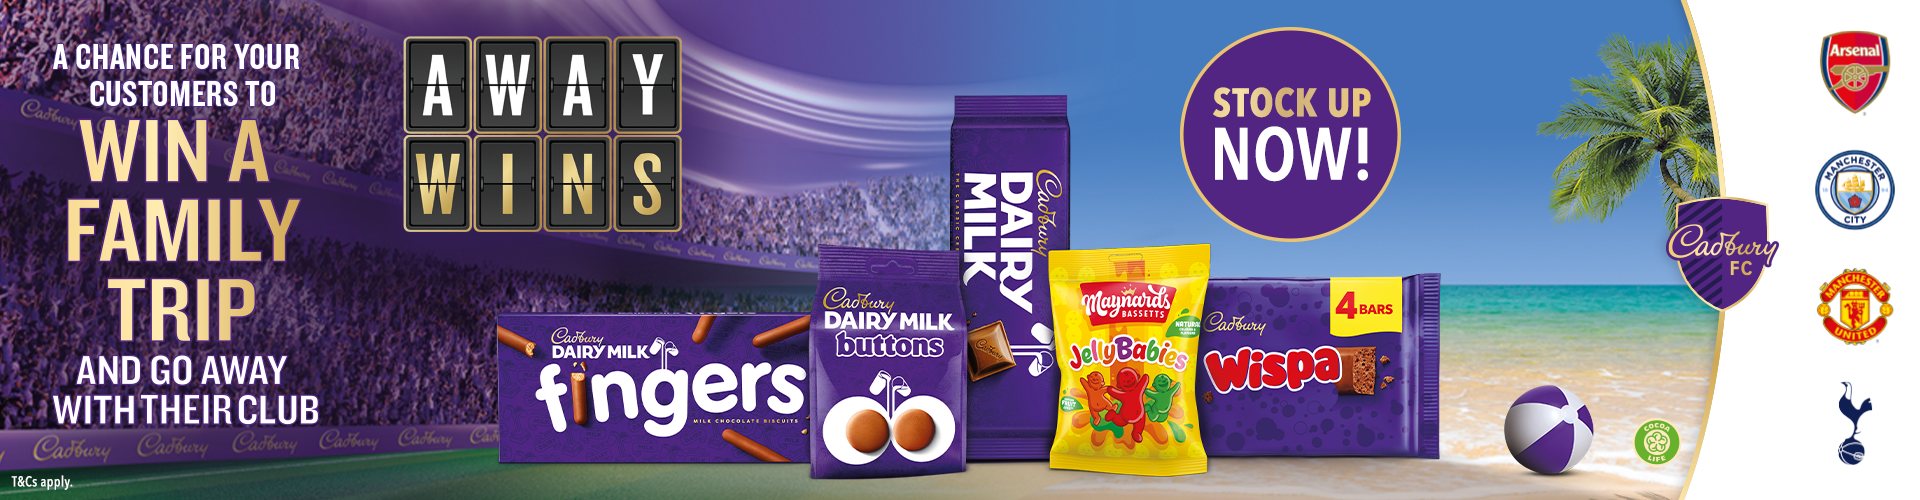 Cadbury AWAY WINS Premier League Promotion